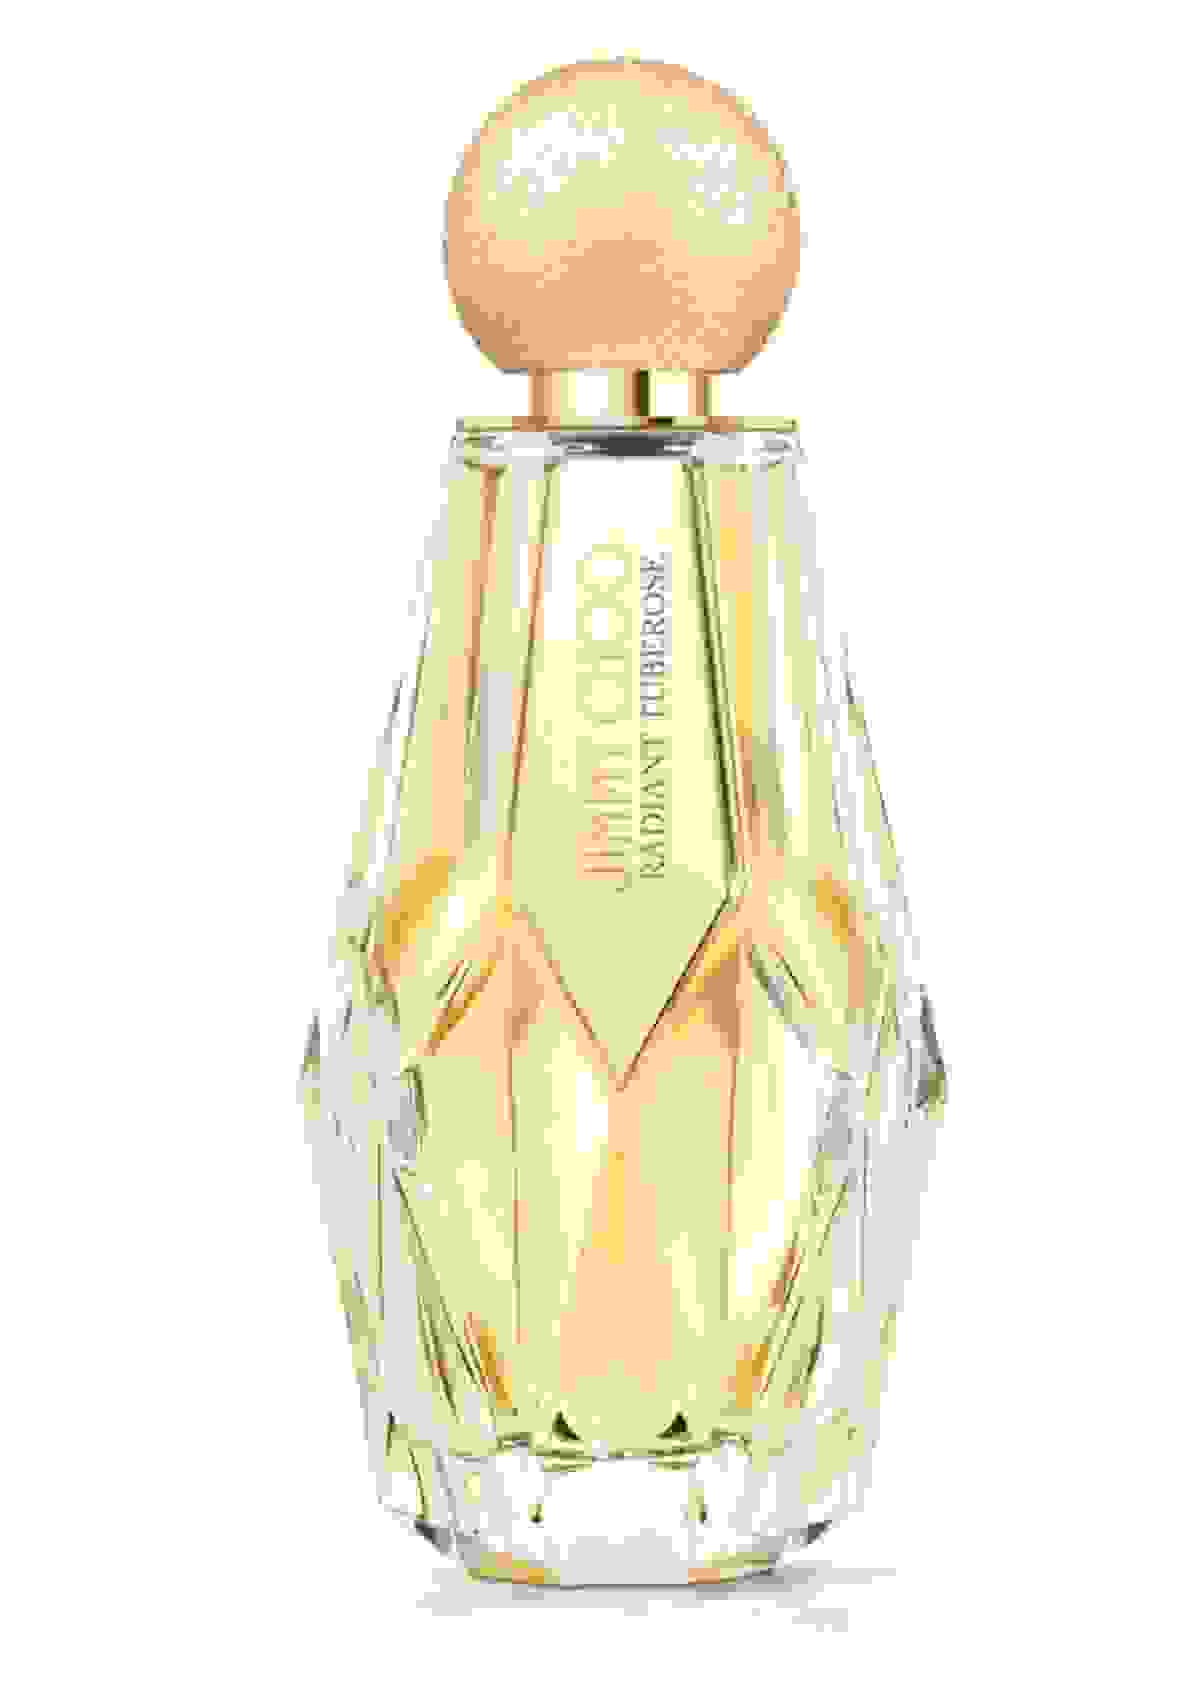 Jimmy Choo women’s fragrance Radiant Tuberose in multi-faceted glass bottle with gold glitter cap